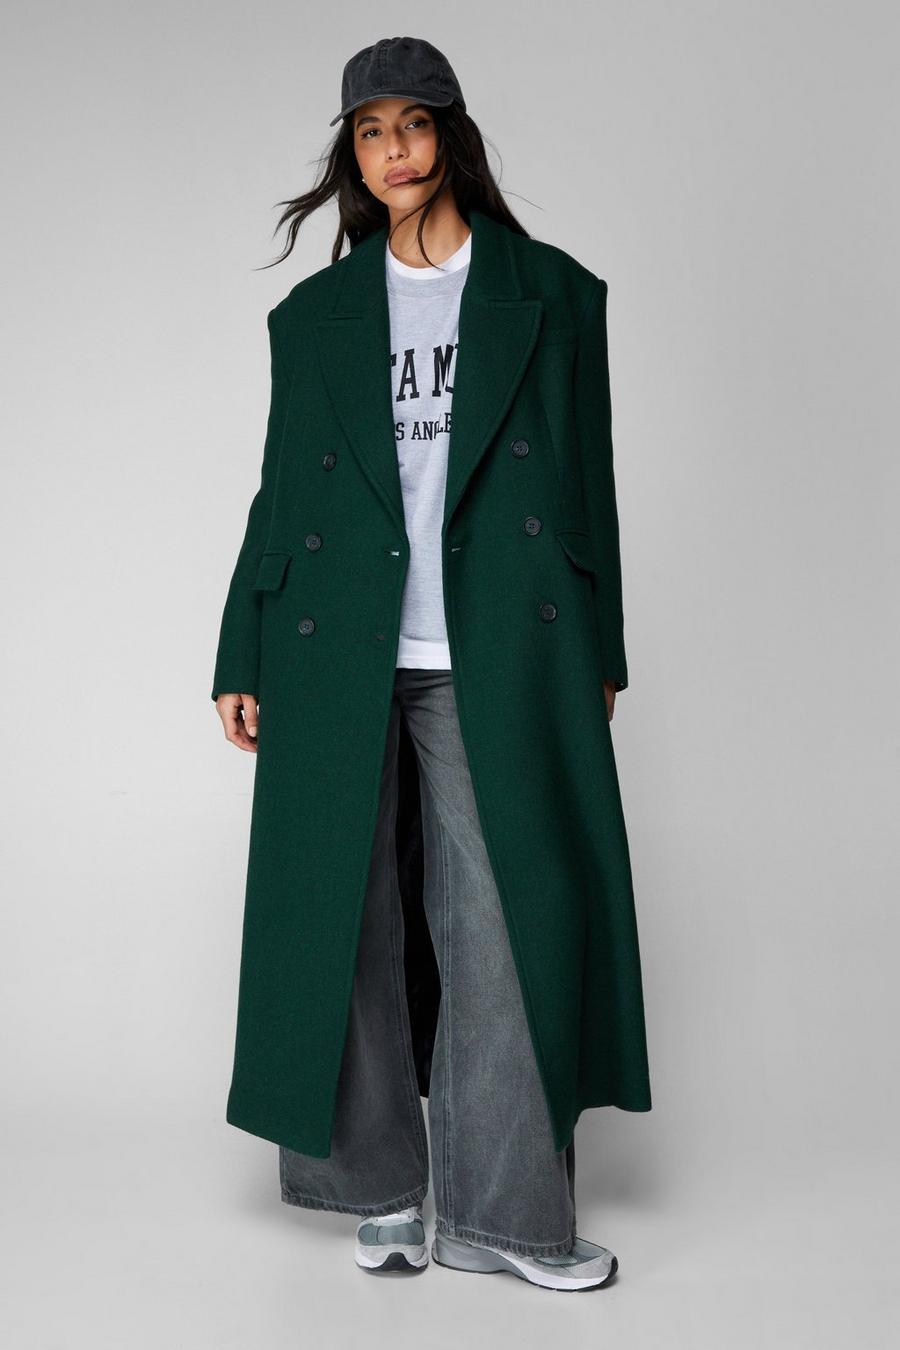 Jackets & Coats, Premium Double Breasted Italian Wool Tailored Coat